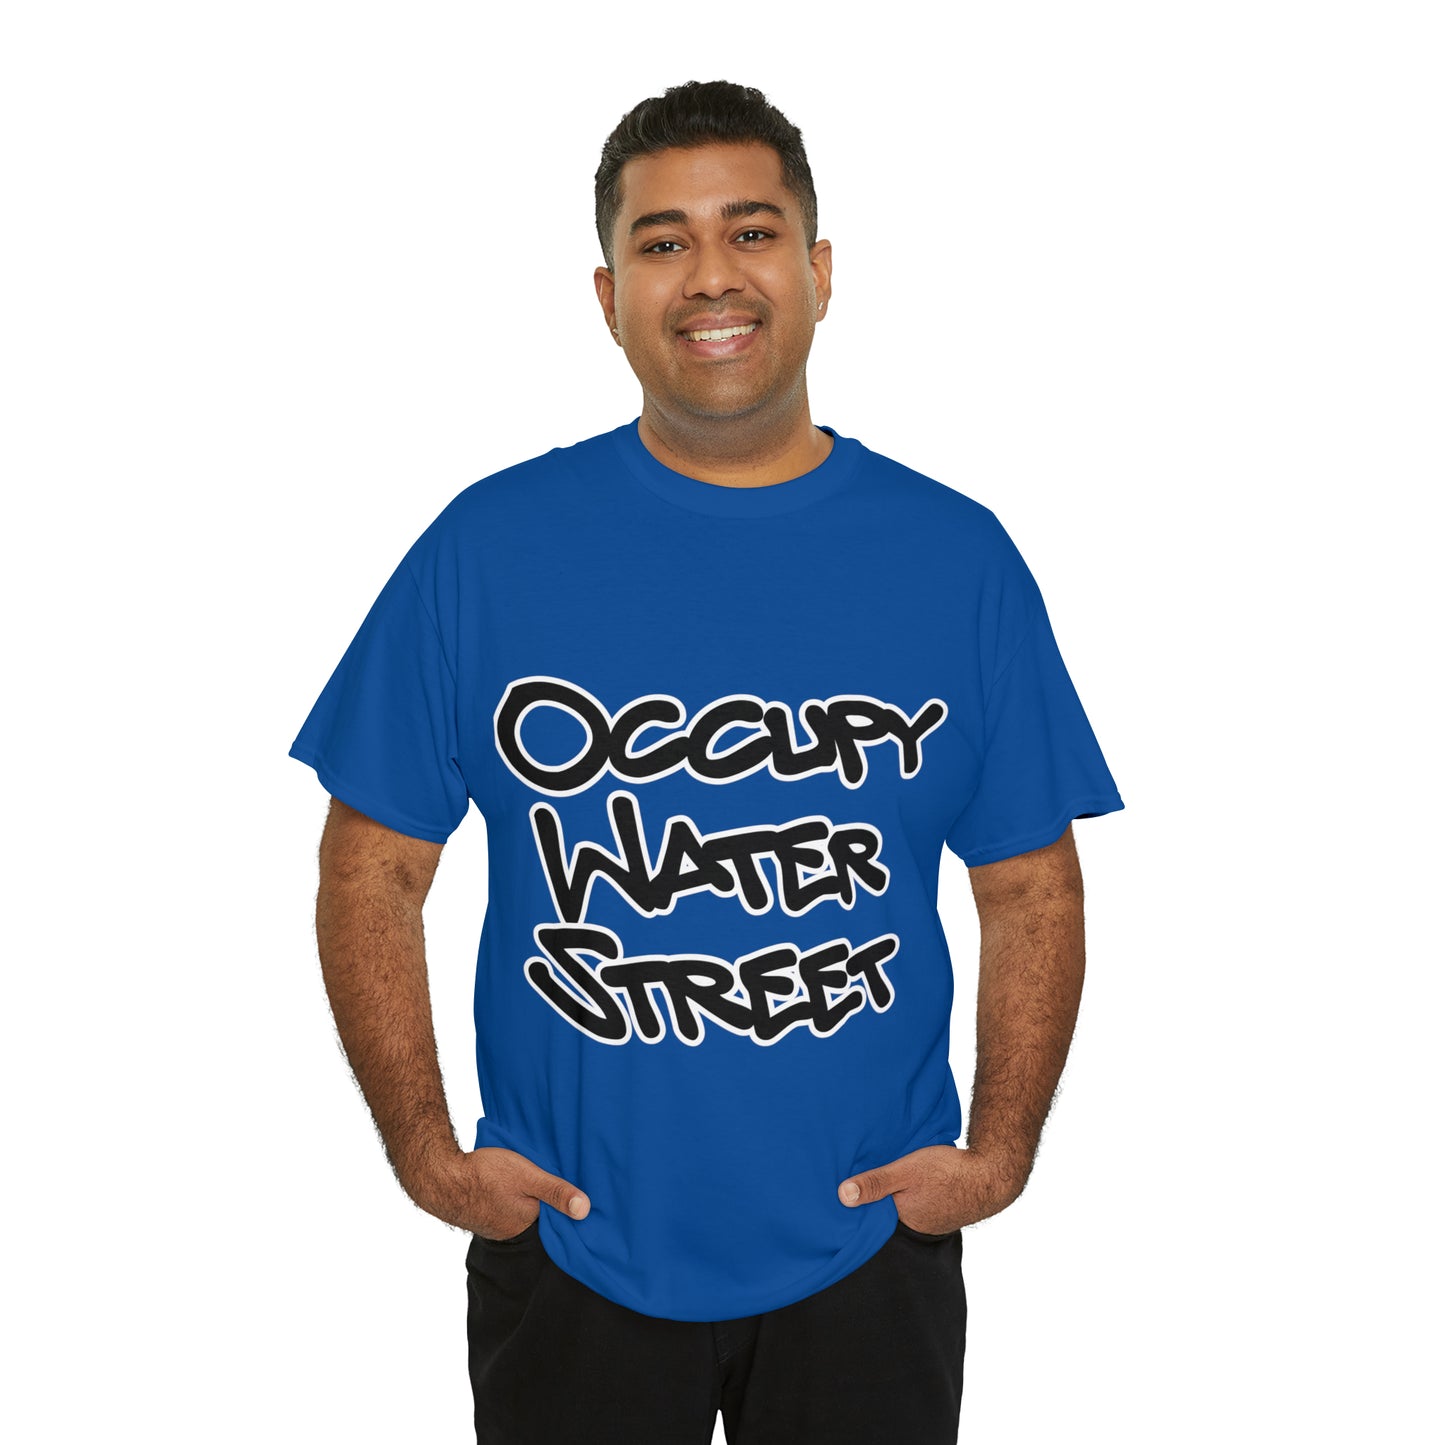 Occupy Water Street Tee